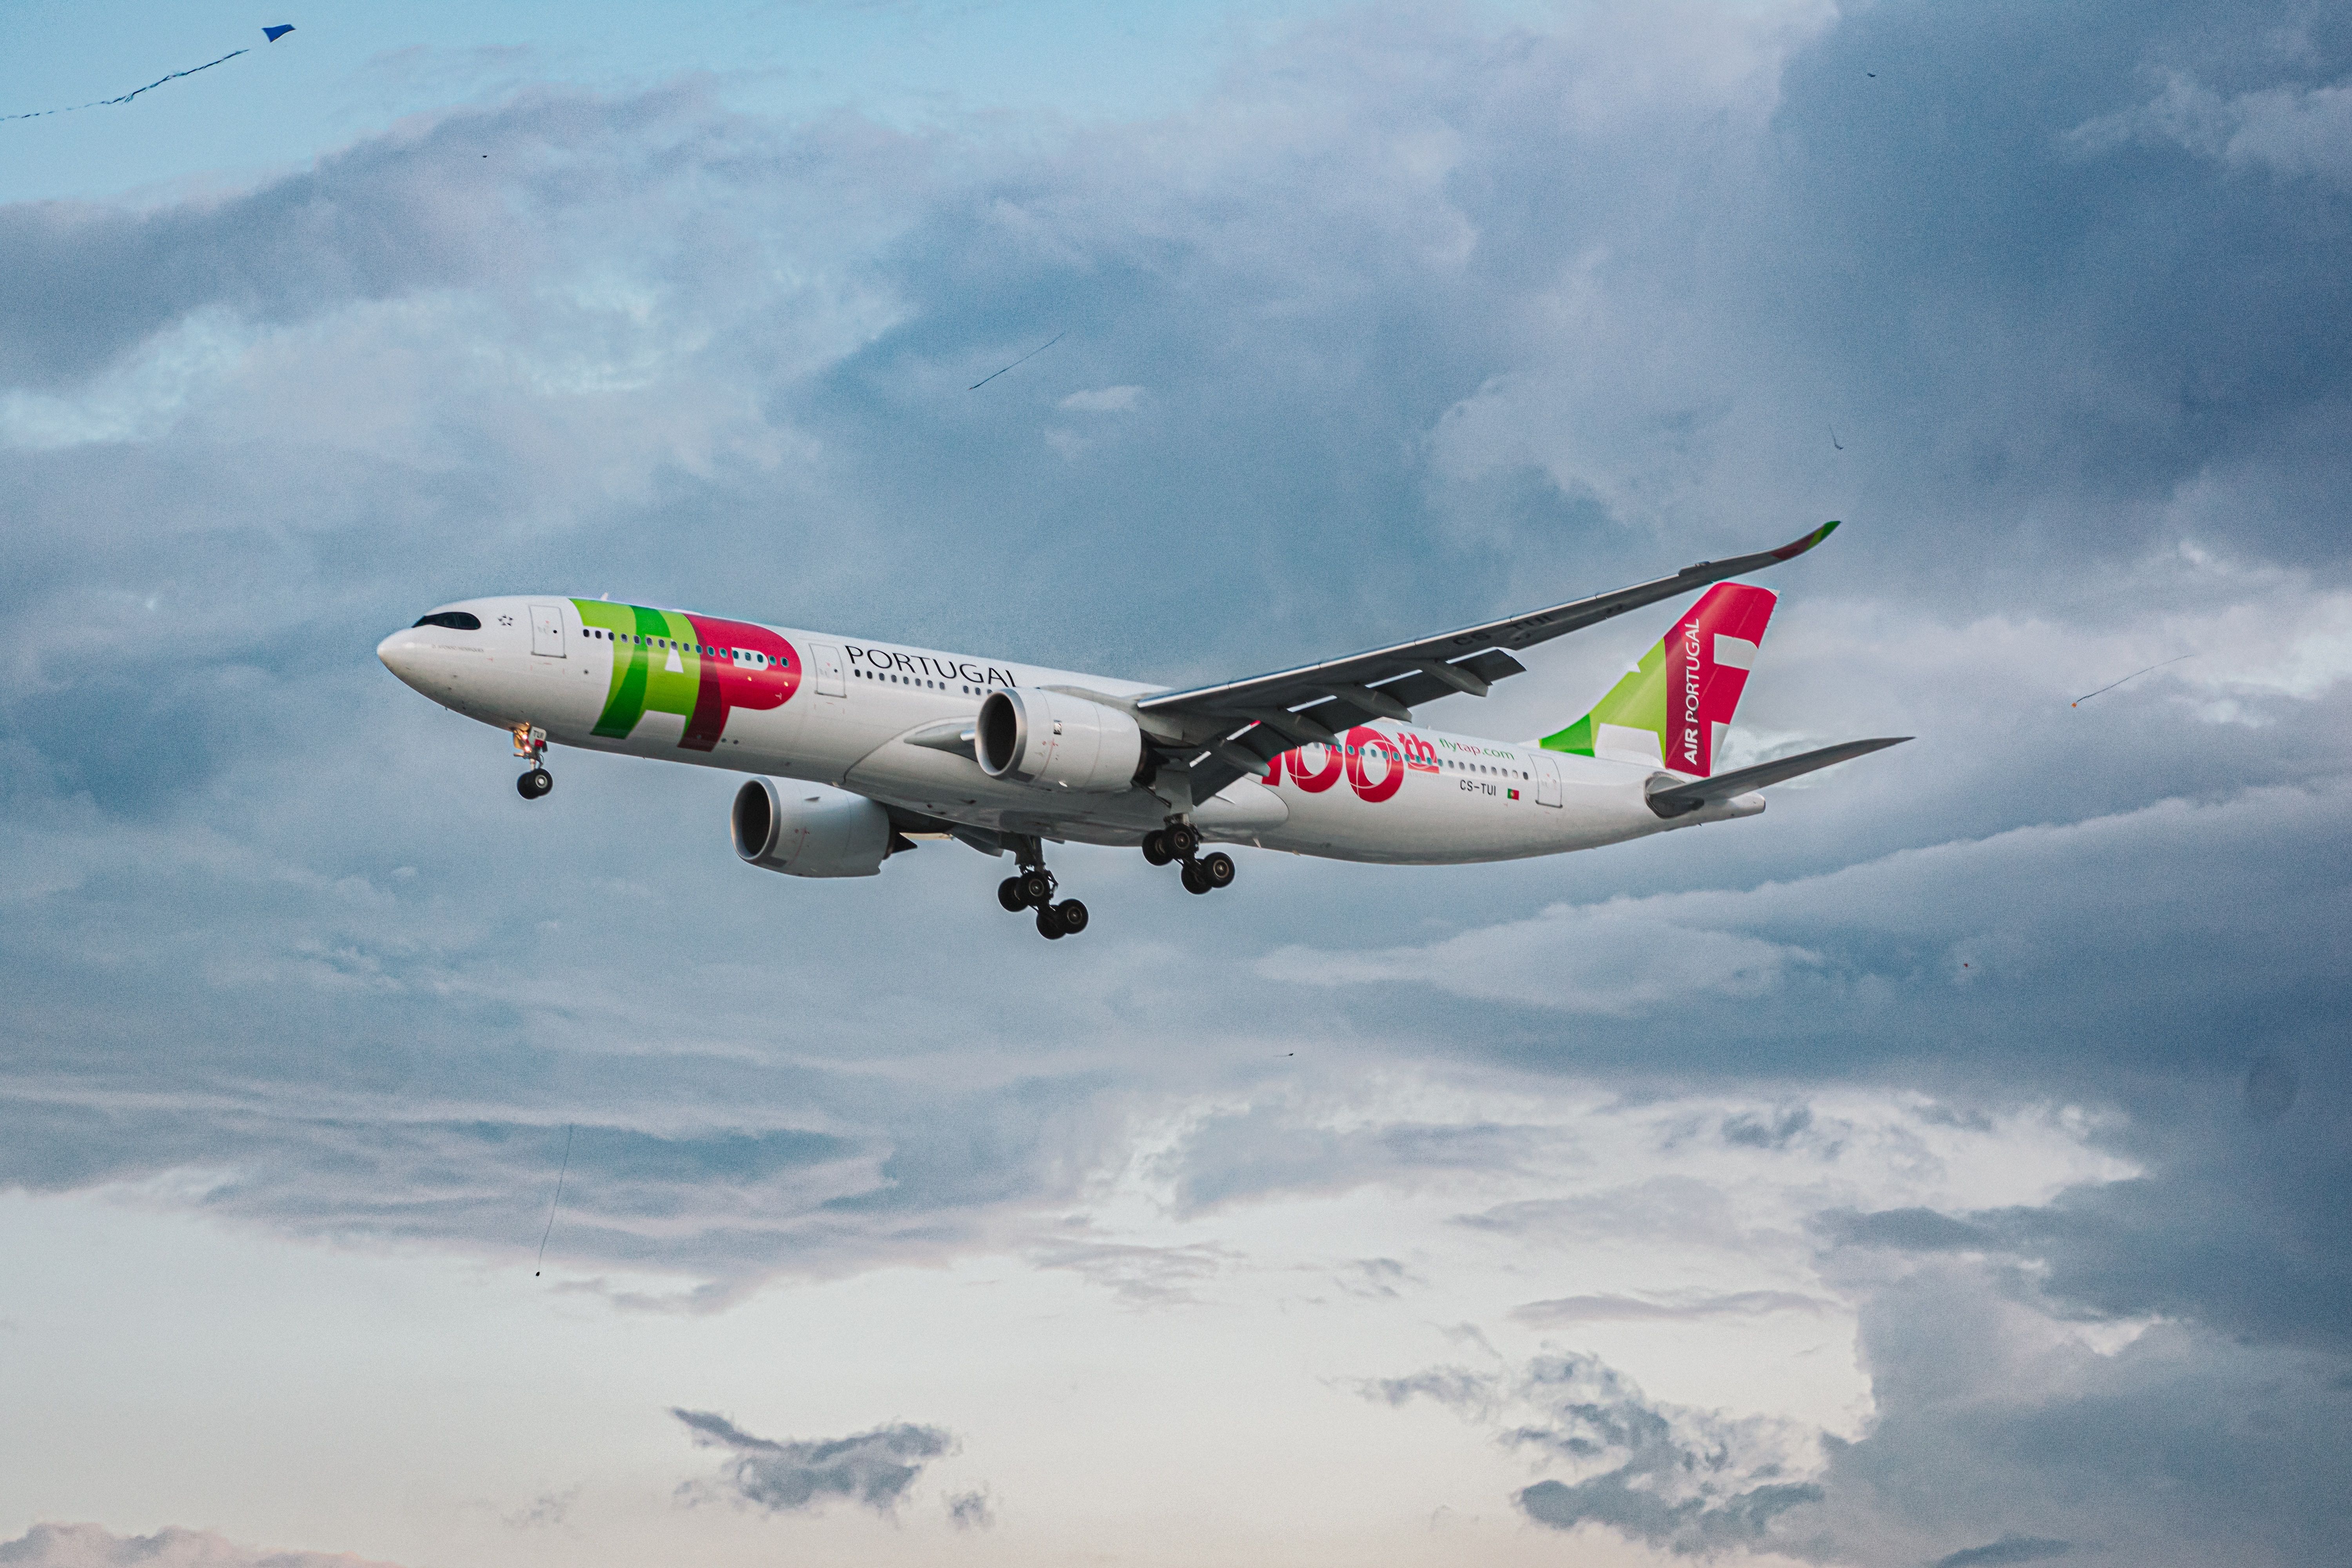 TAP Air Portugal Airbus A330neo landing in GRU